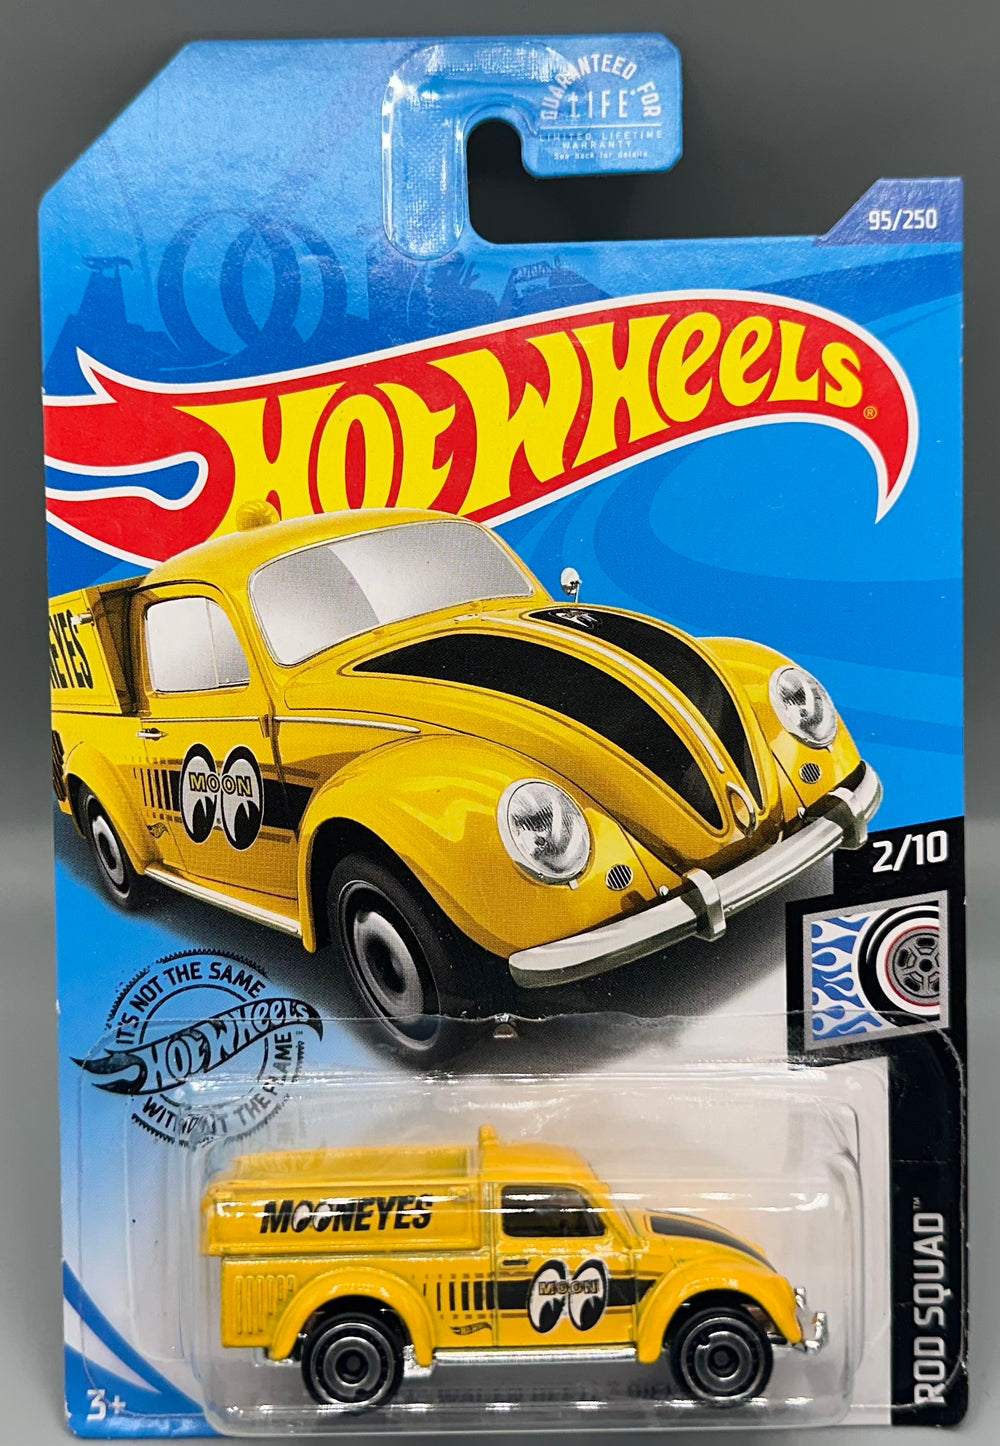 Hot Wheels '49 VW Volkswagen Beetle Pickup